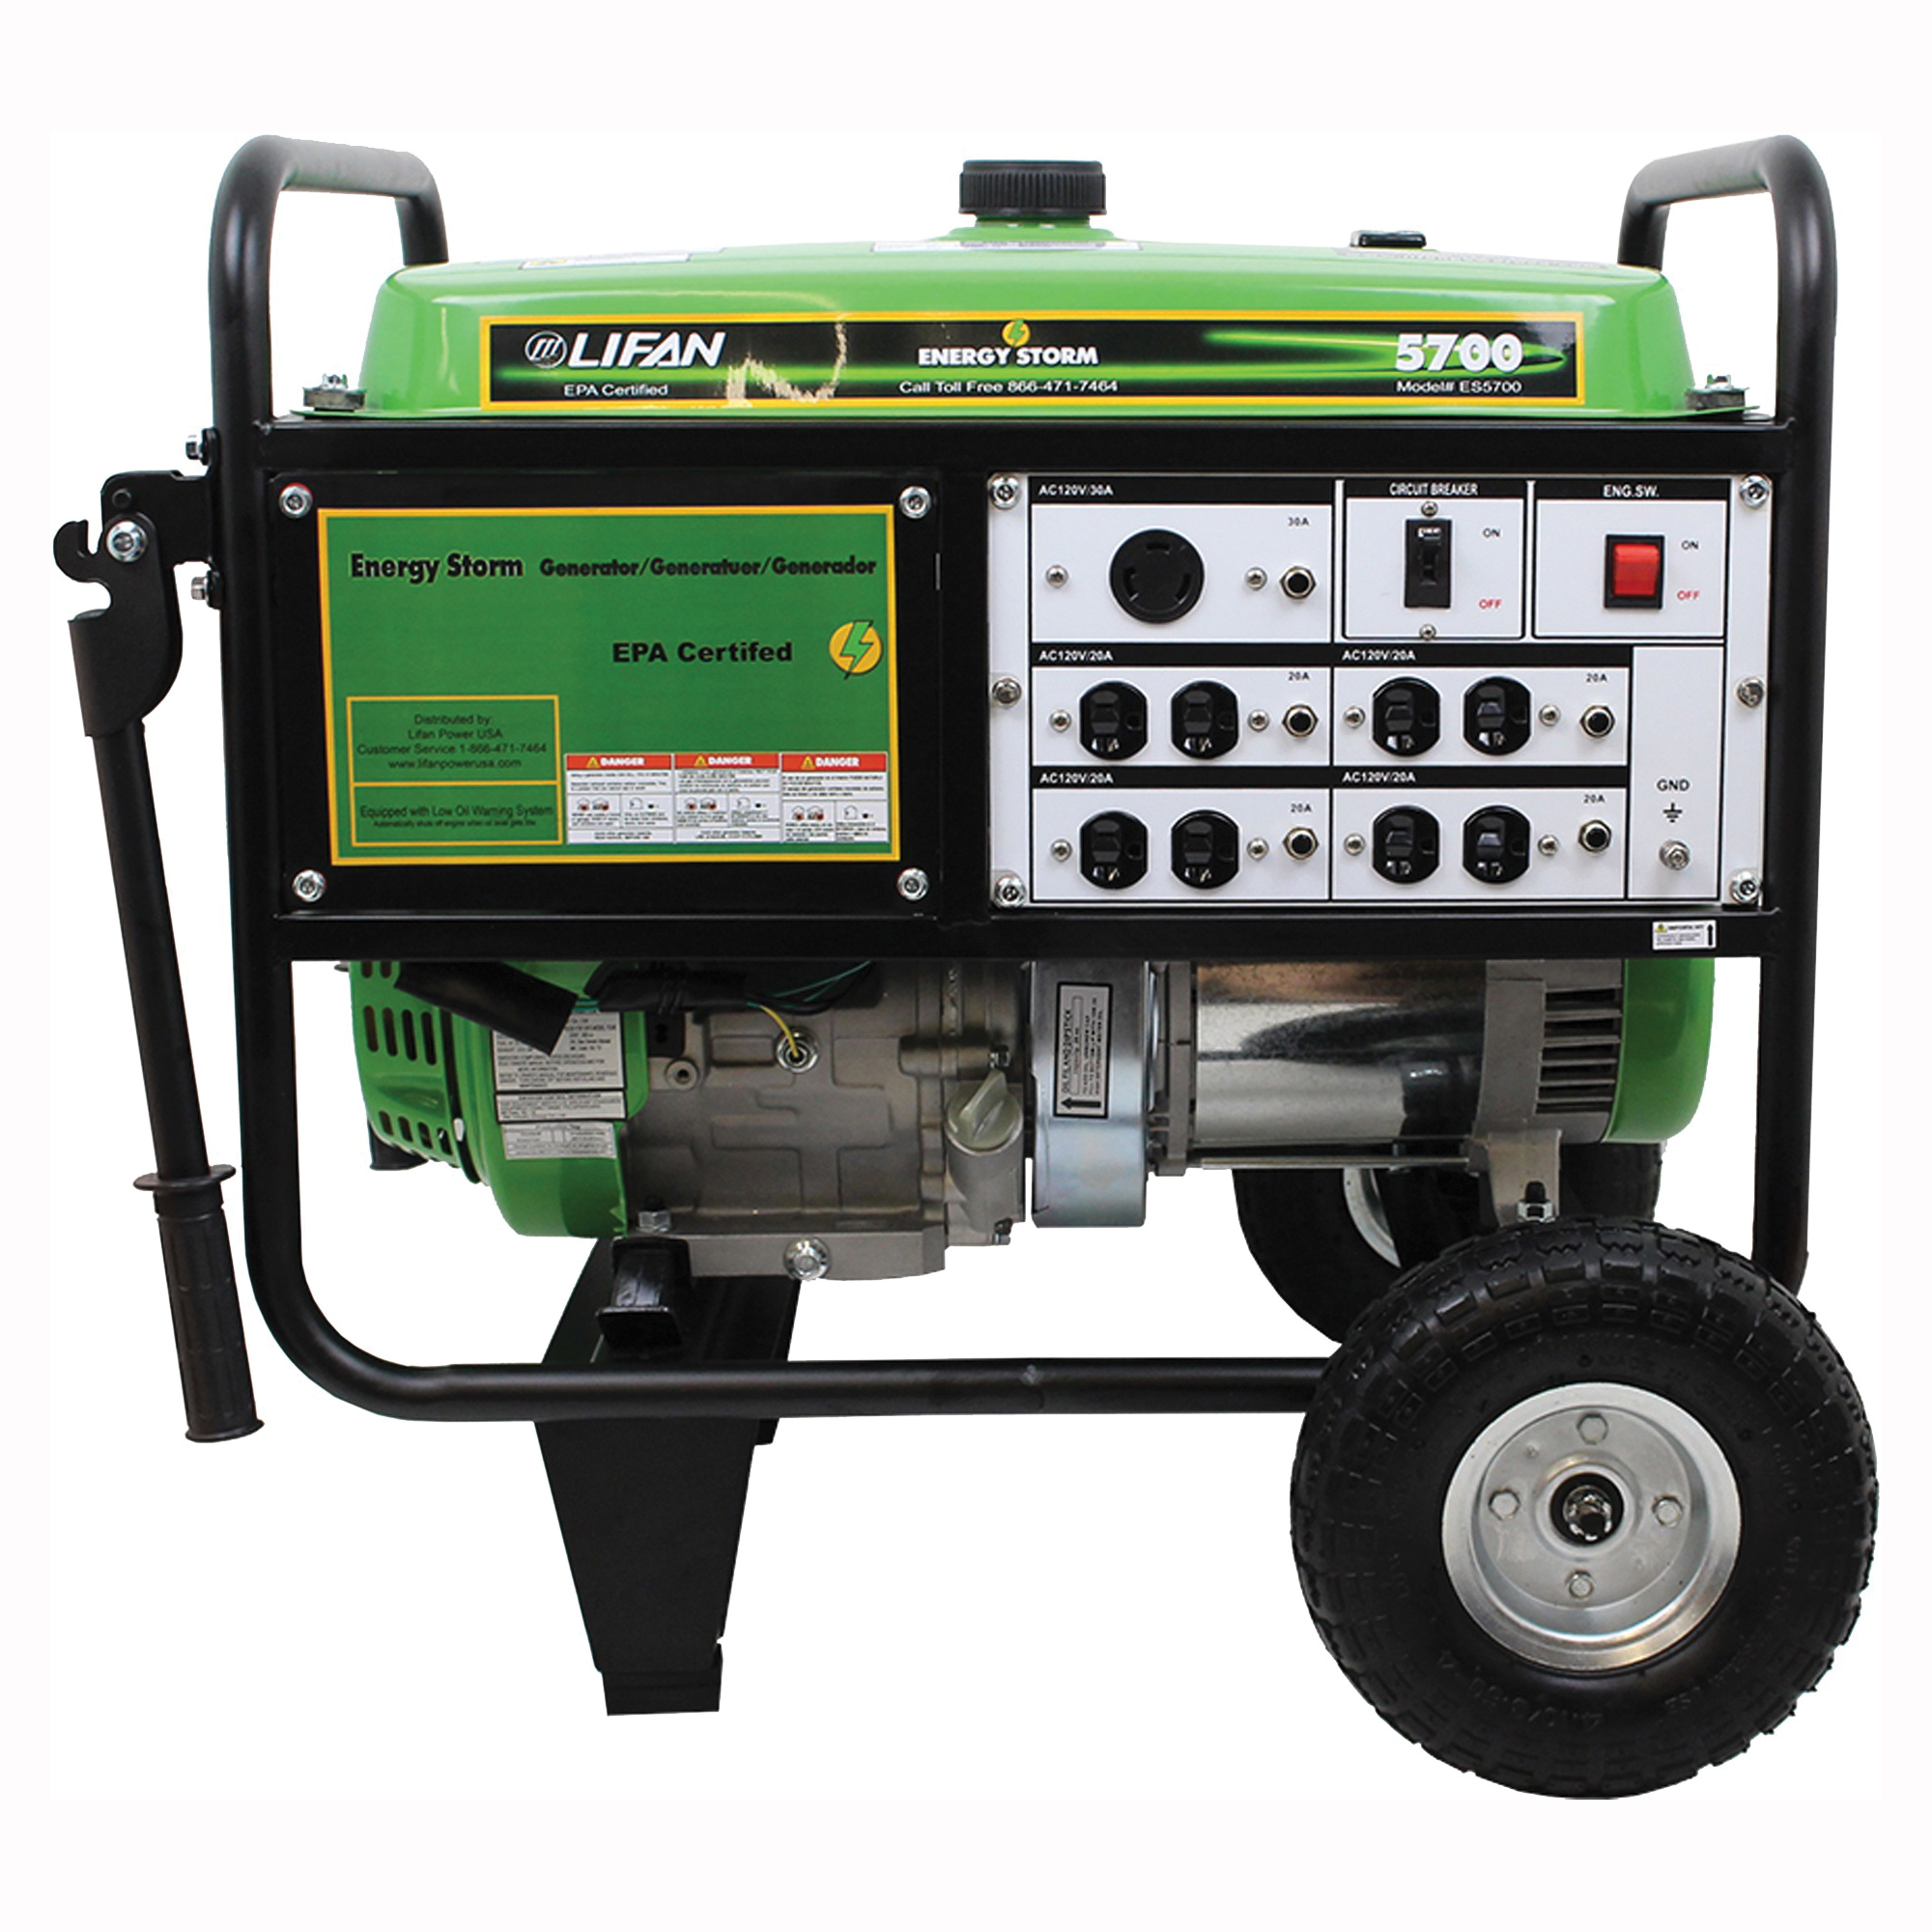 ES5700 Portable Generator, 42.2 A, 120 V, 5700 W Output, Octane Gas, 6.5 gal Tank, 10 hr Run Time